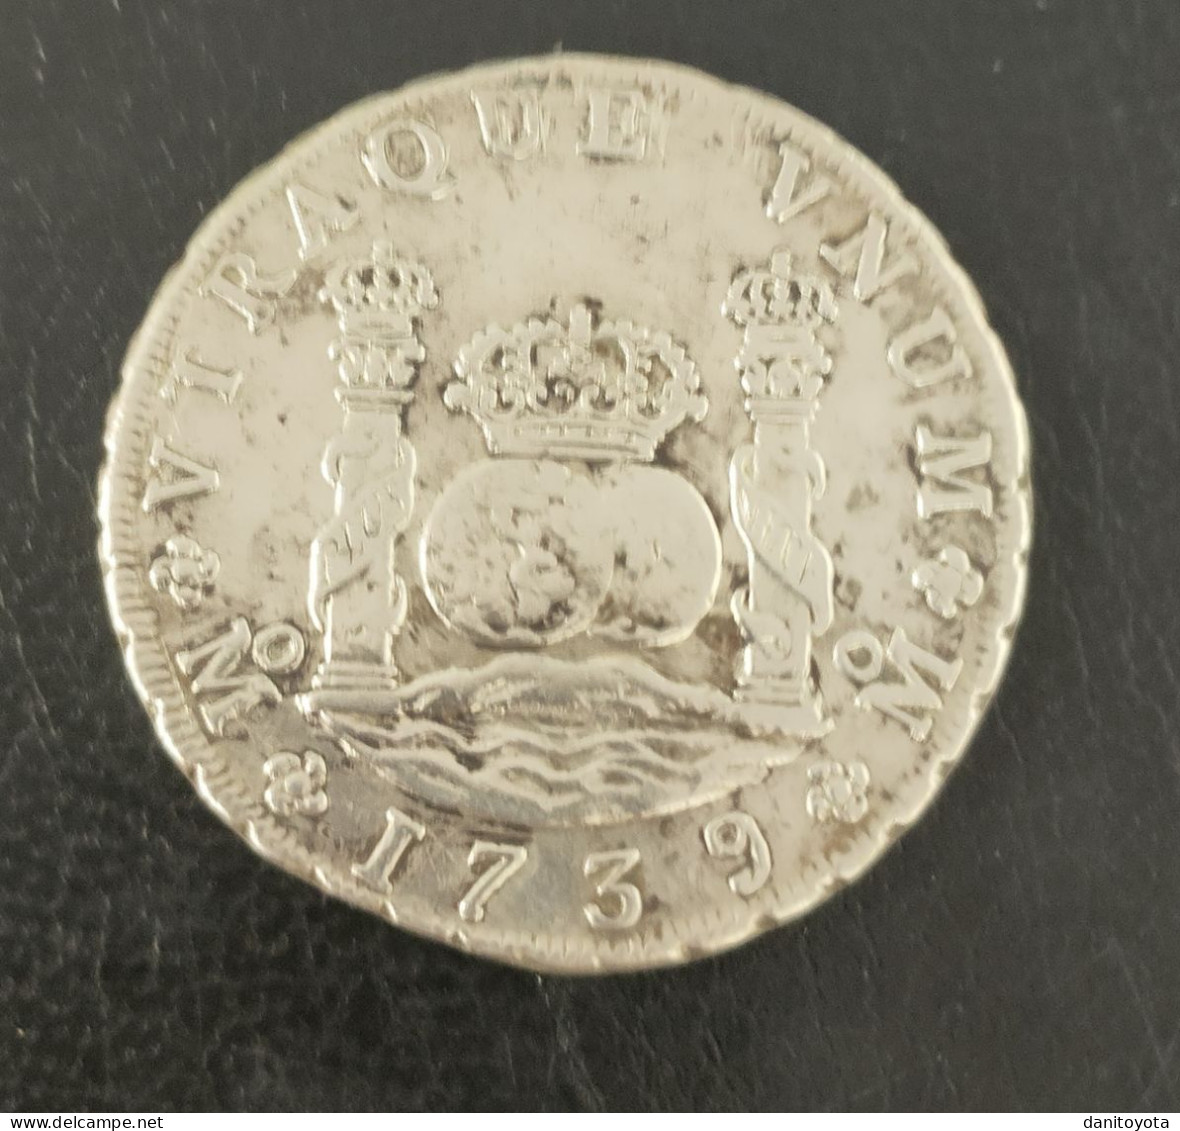 ESPAÑA. AÑO 1739. FELIPE V. 8 REALES PLATA MEXICO MF. PESO 26.5 GR.  REF A/F - Monedas Provinciales